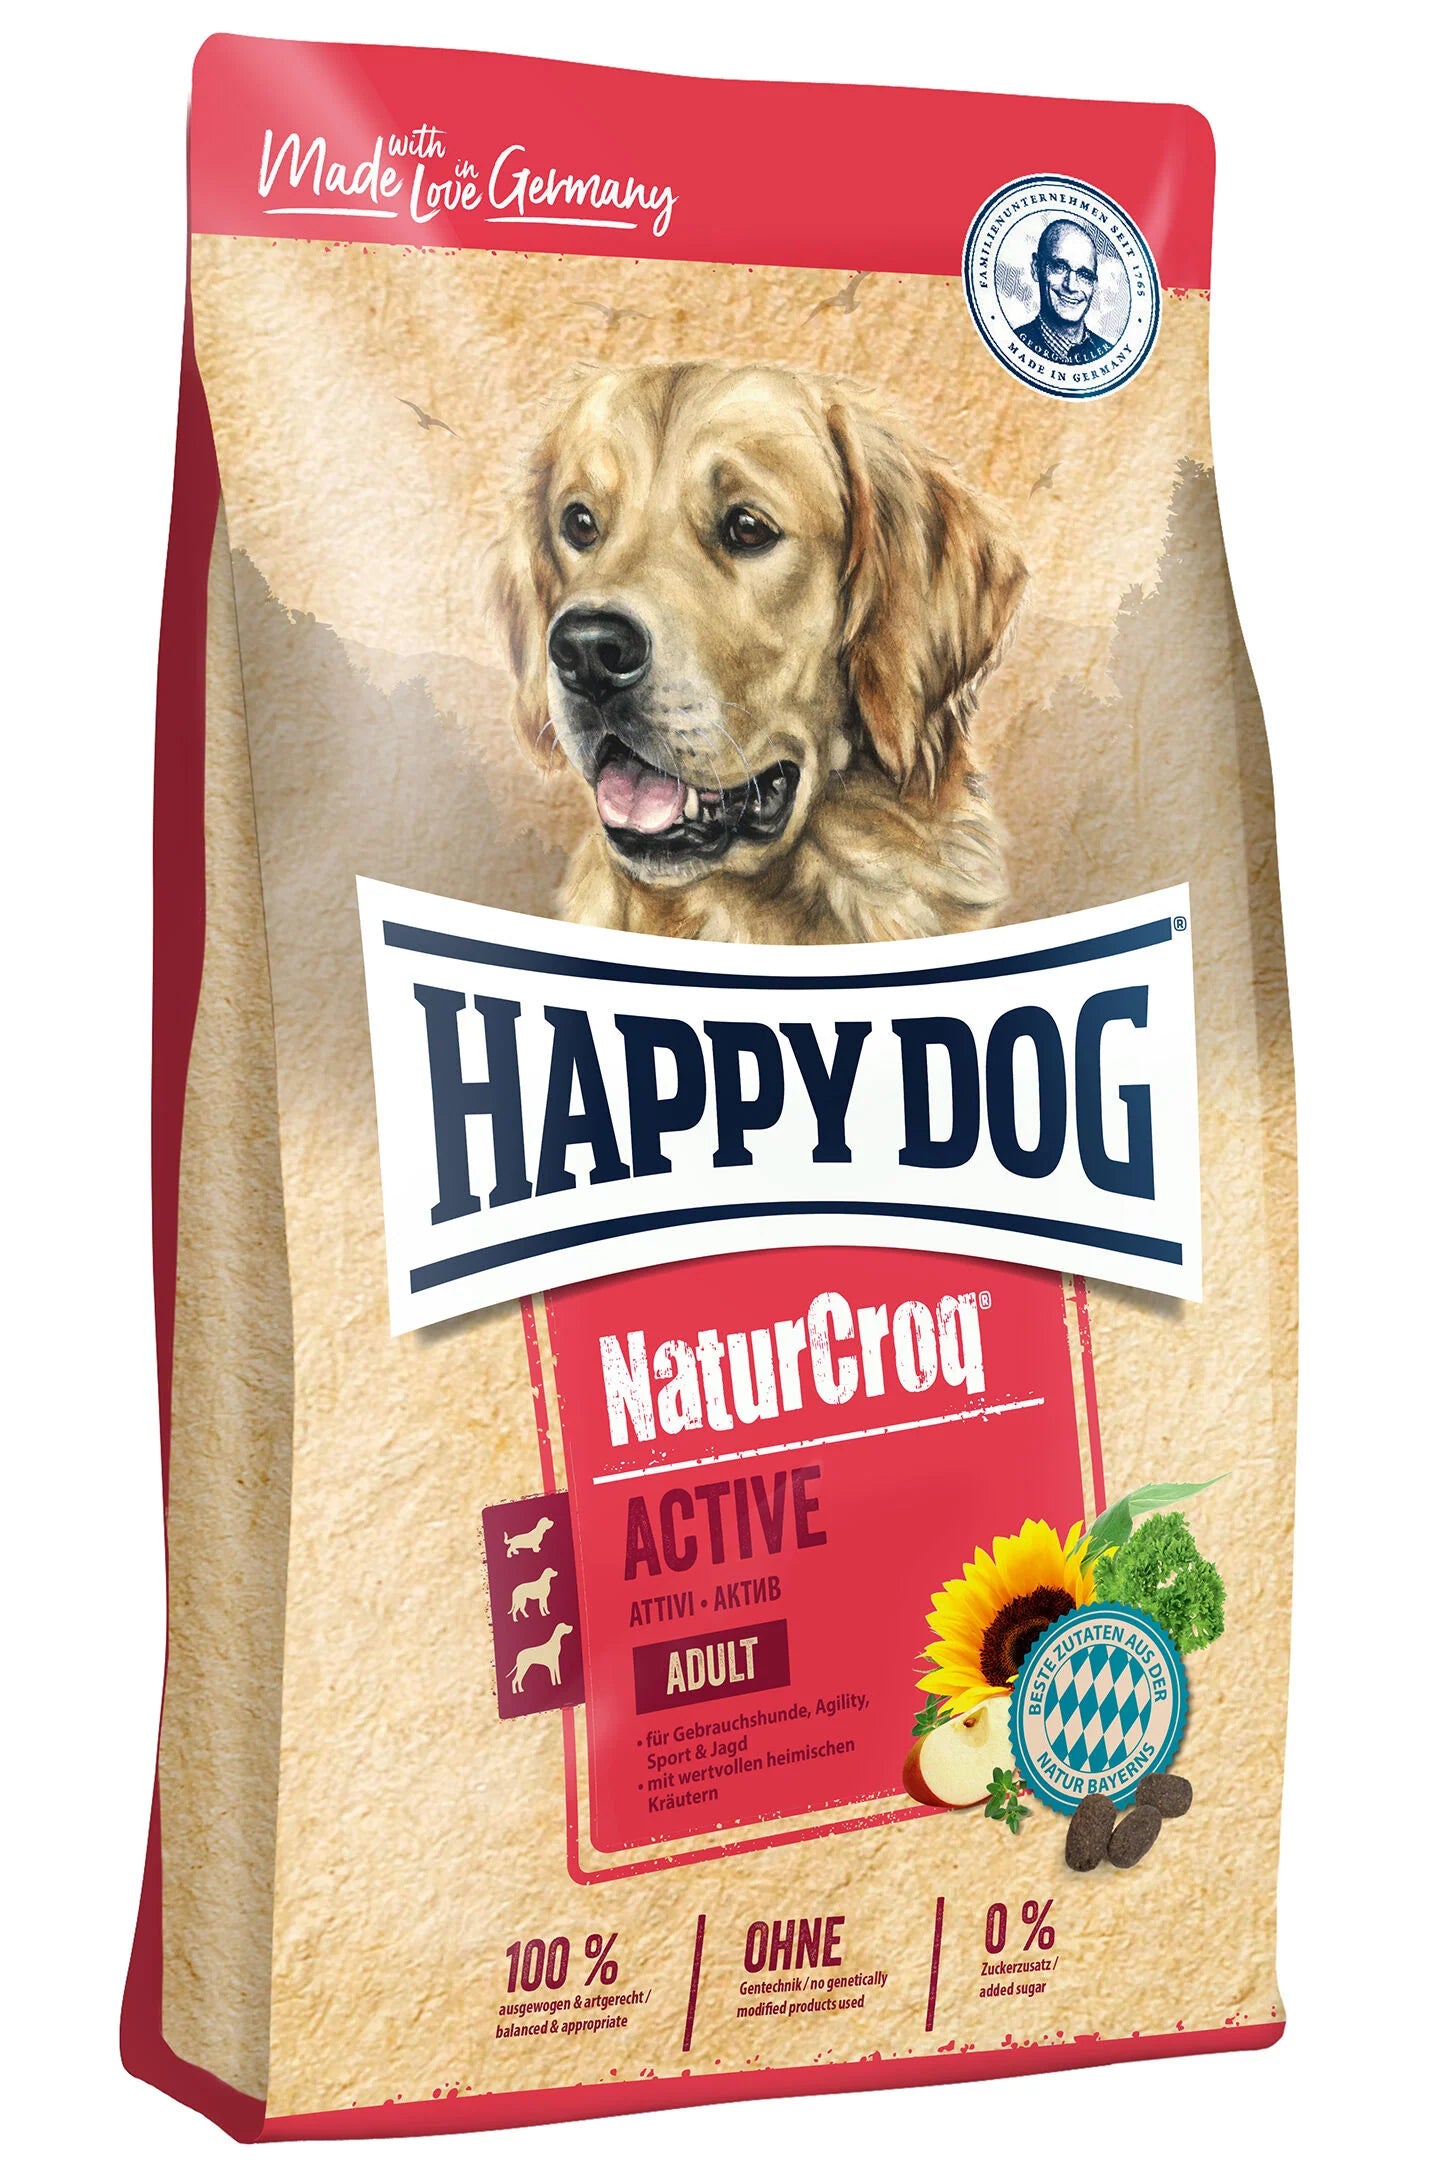 HAPPY DOG NaturCroq Active Adult Dog (15 Kgs)